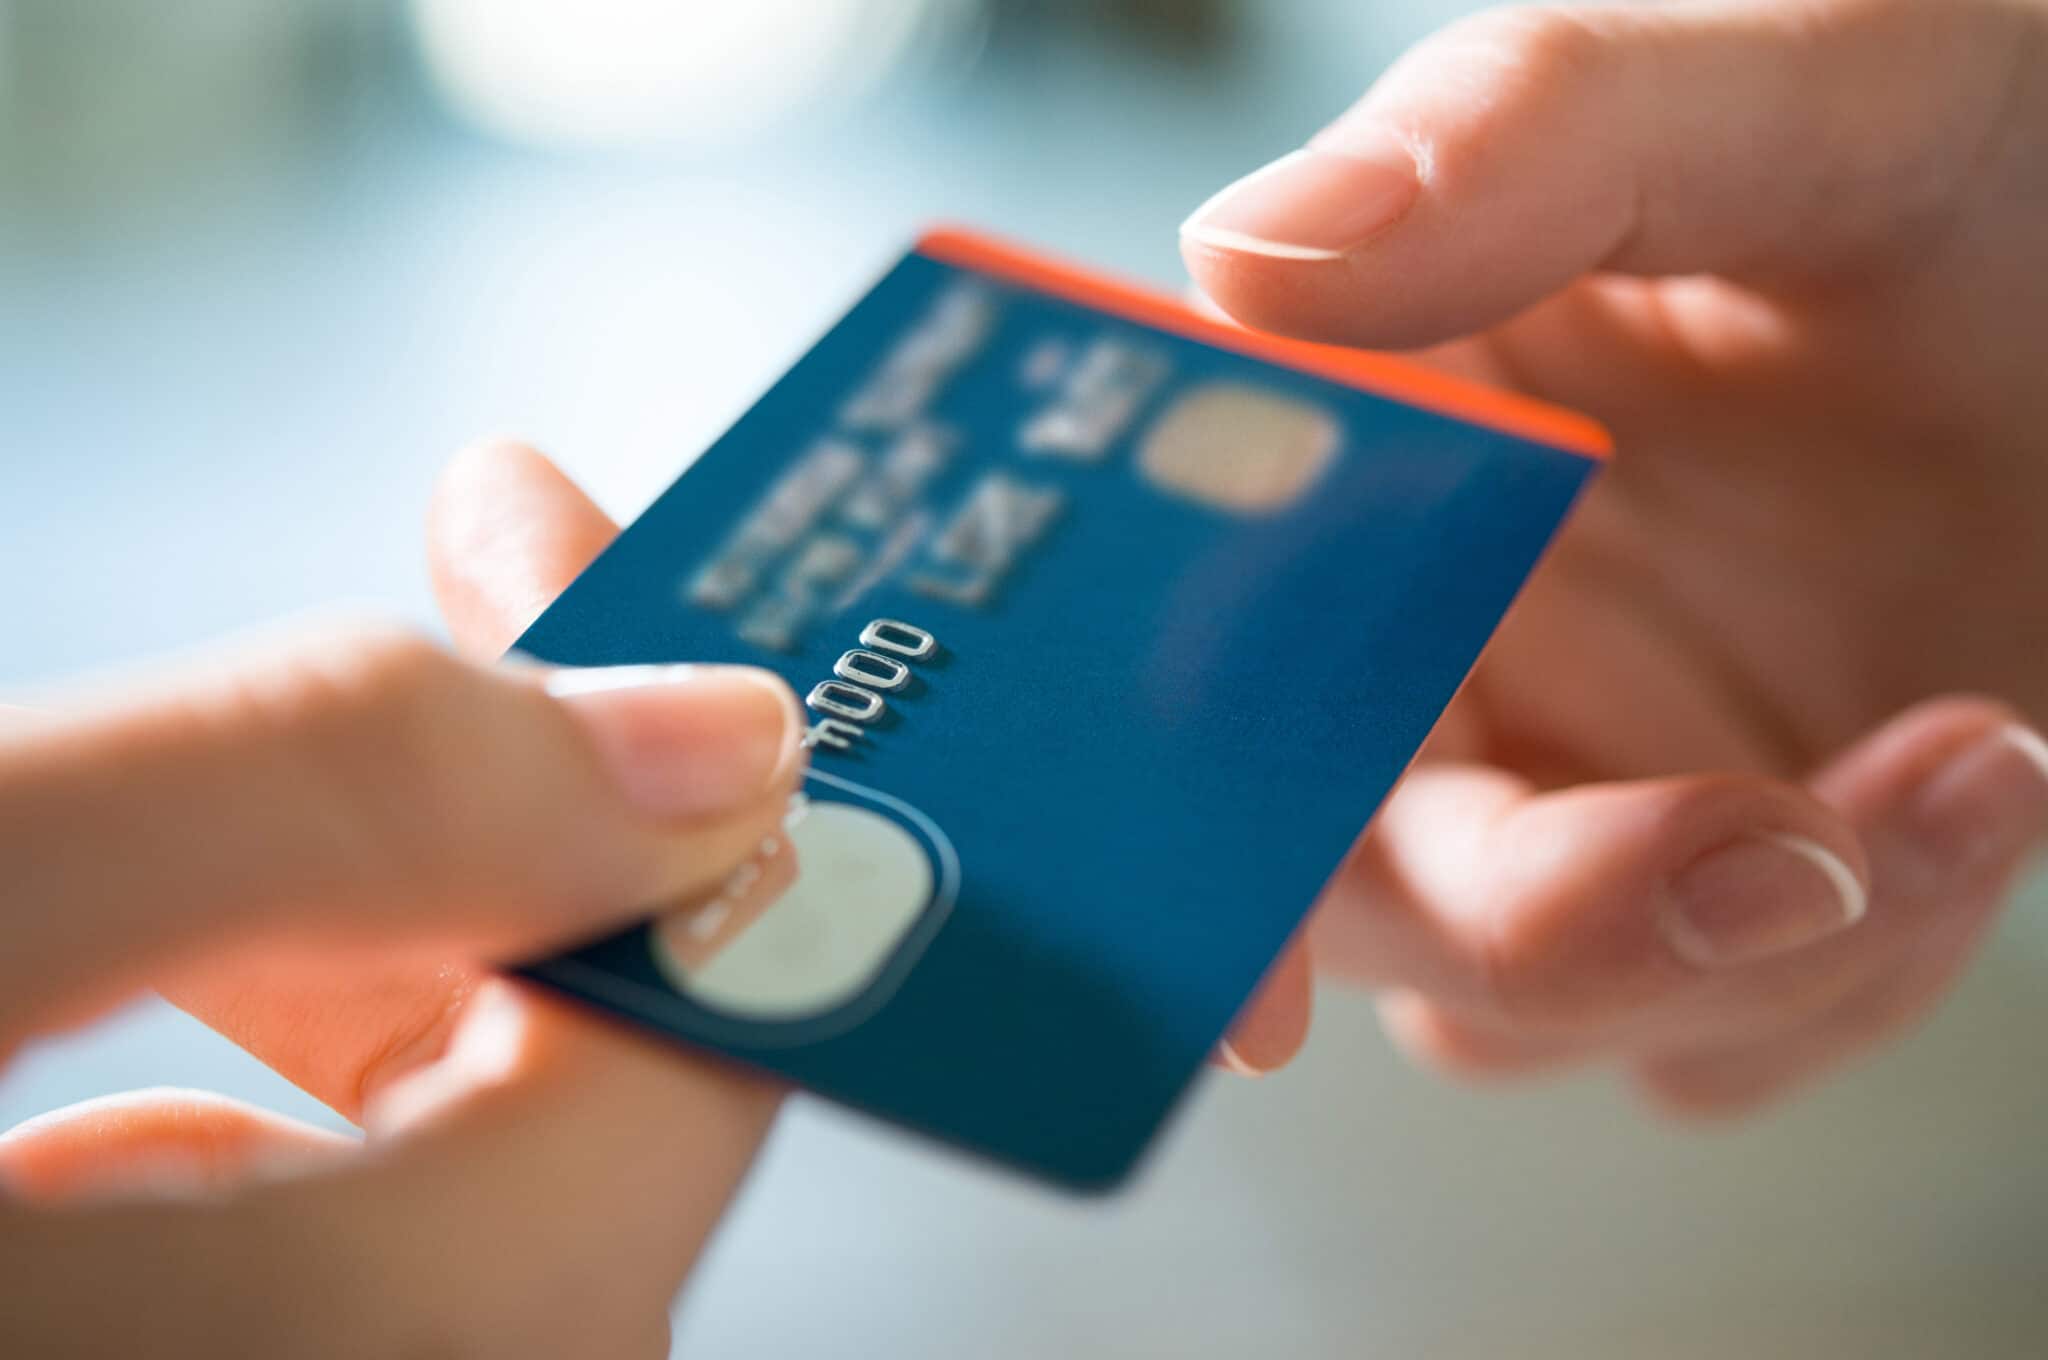 Woman runs up $8,603 bill on stolen credit card at Tybee Island hotel